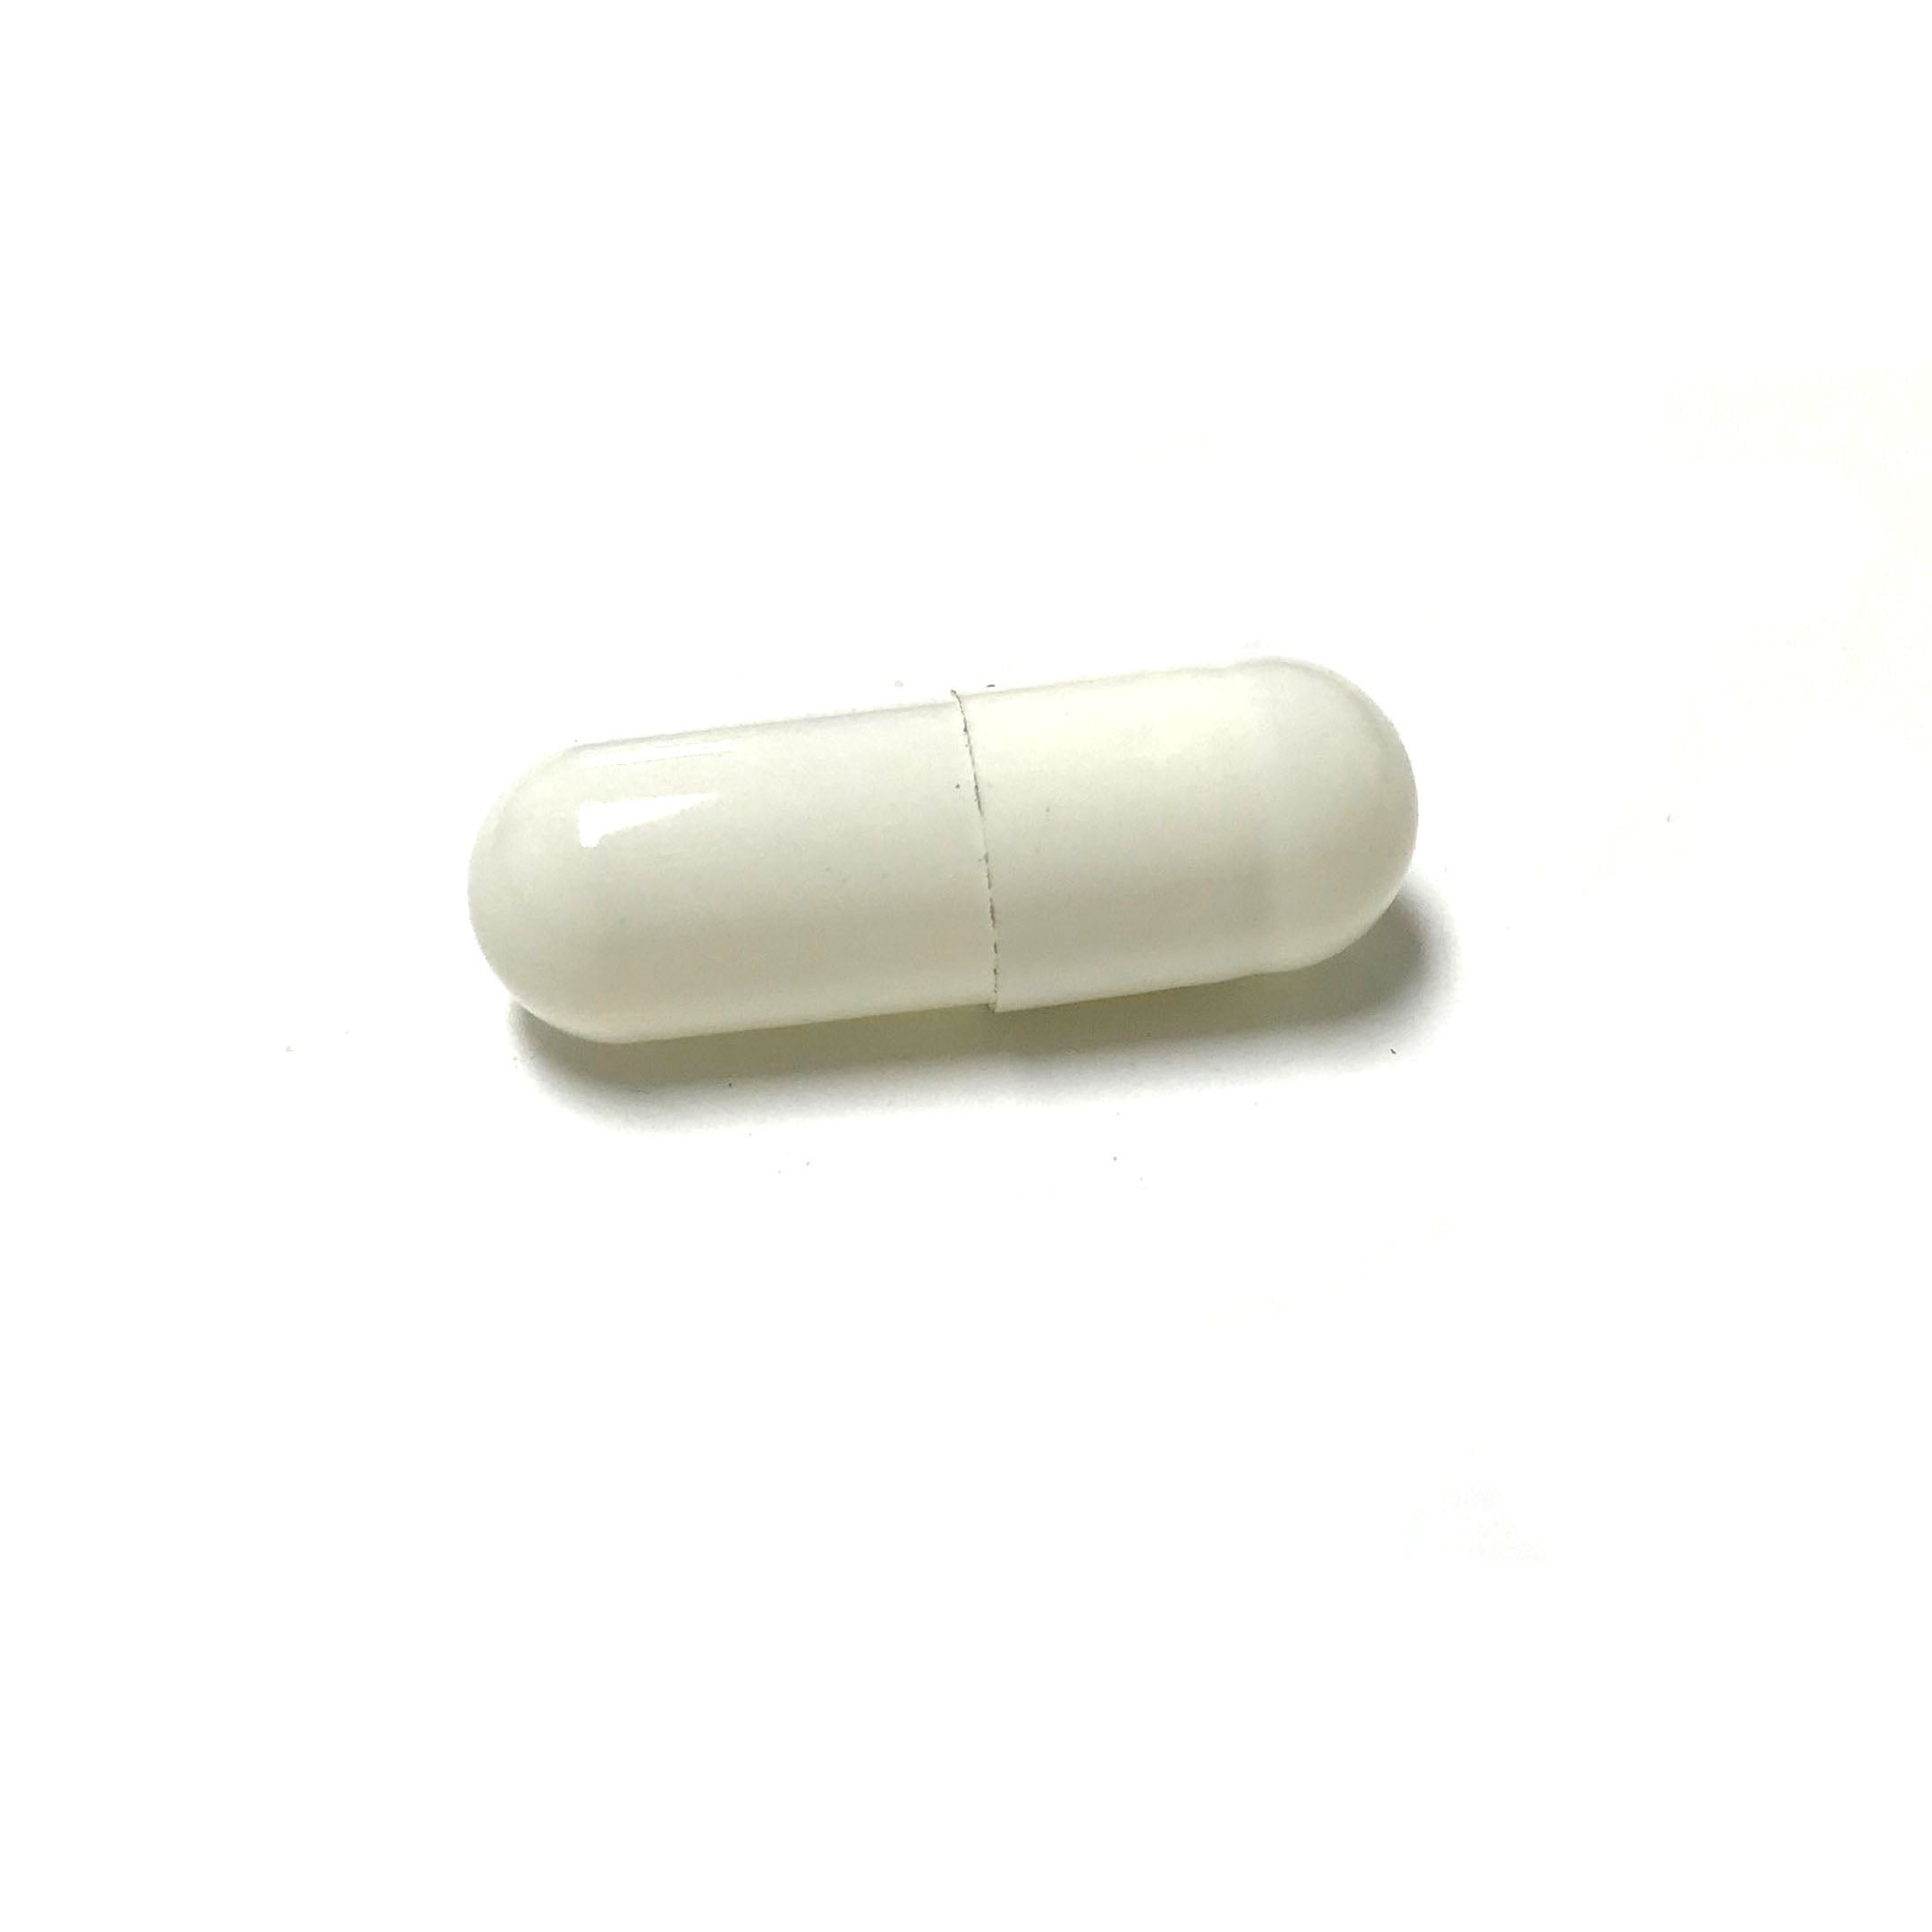 Fake Medicine Pill Capsules in 16 Dram Amber Plastic Medicine Vial with Lid